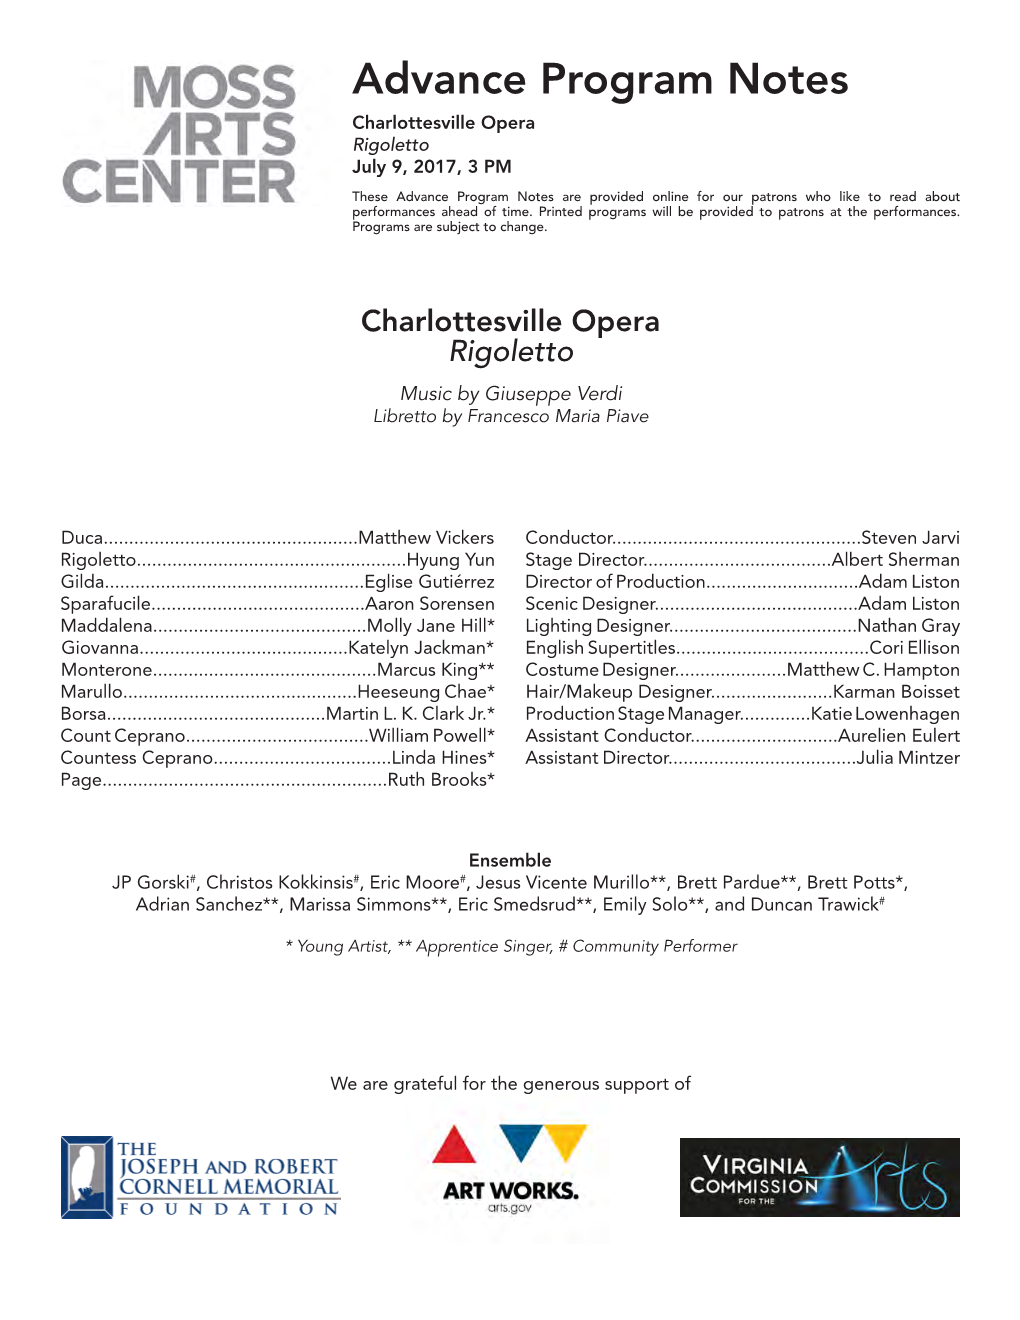 Advance Program Notes Charlottesville Opera Rigoletto July 9, 2017, 3 PM